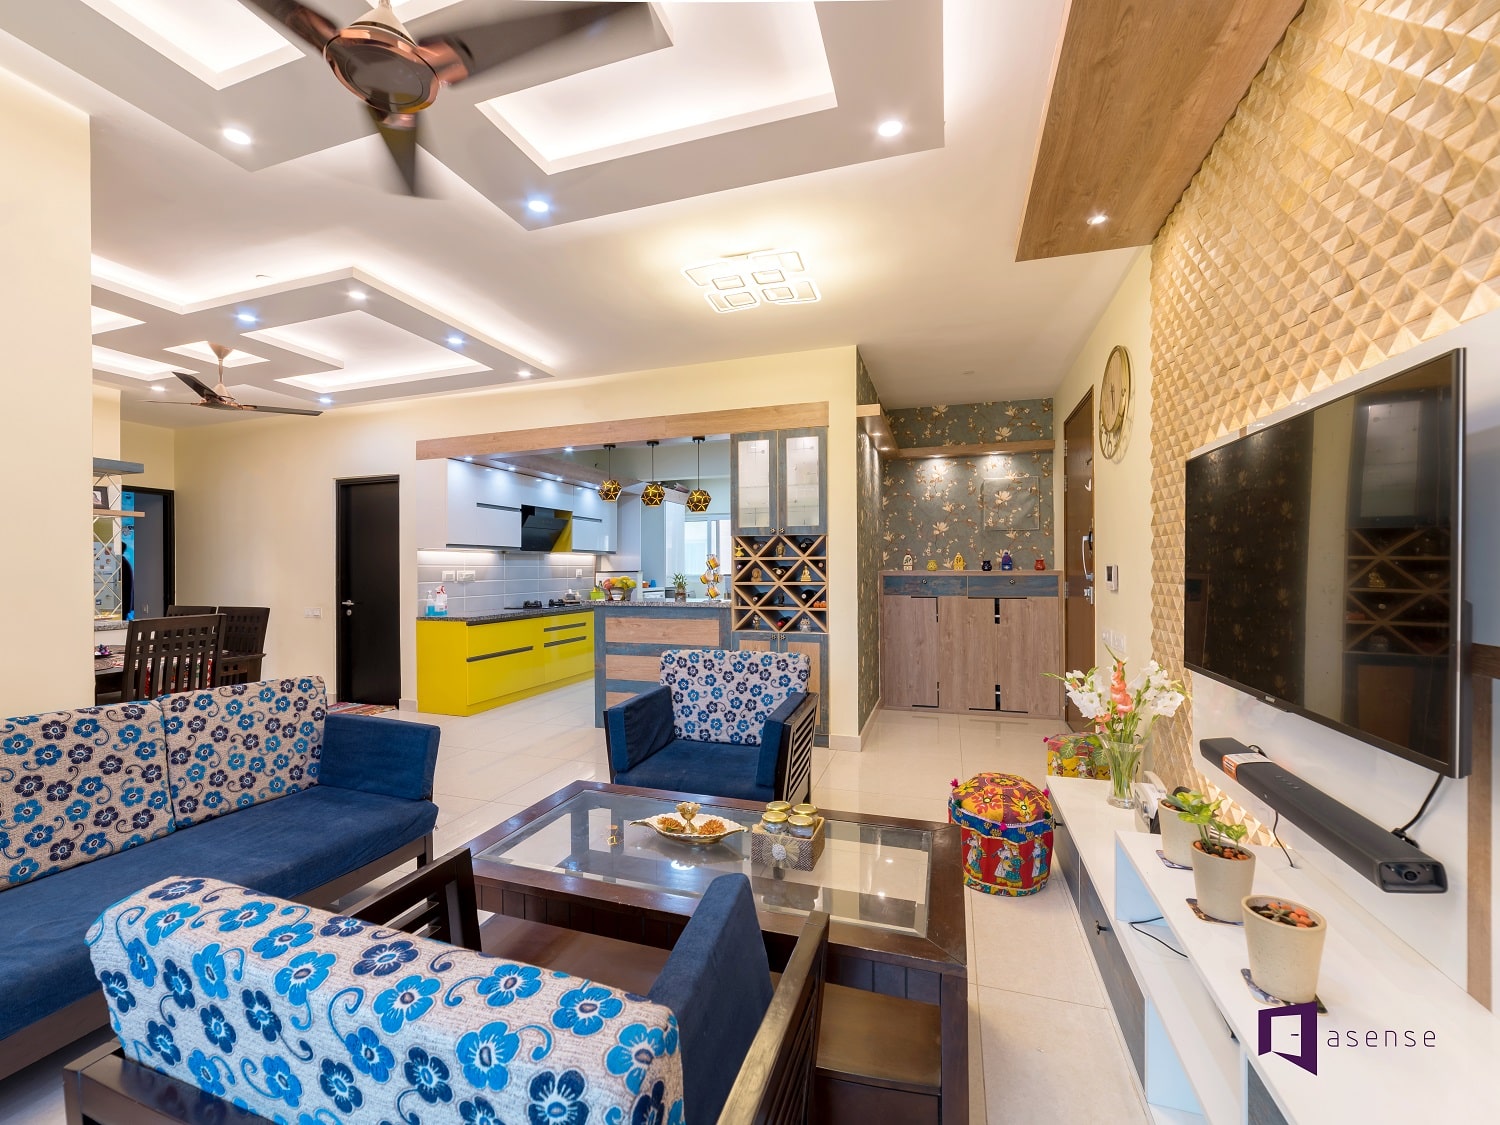 How to choose the best interior designer in Bangalore